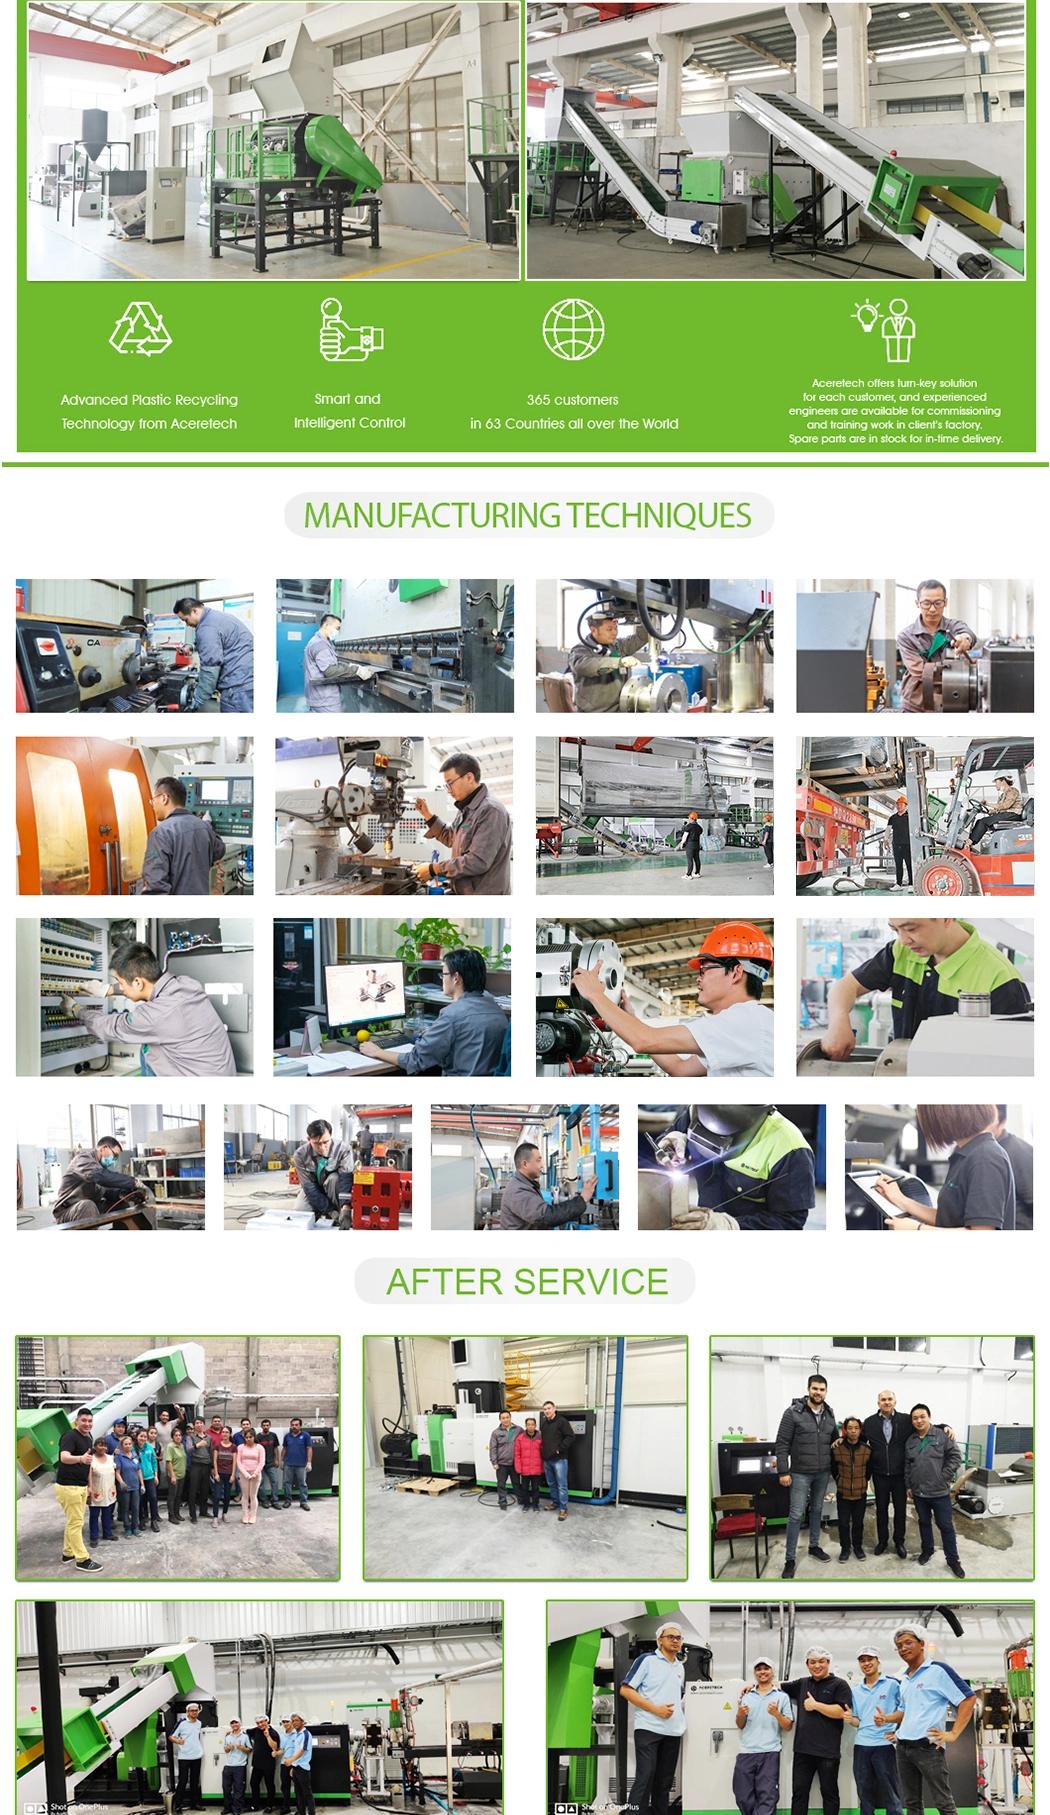 Aceretech Flexible Manufacturing Recycling Granulator